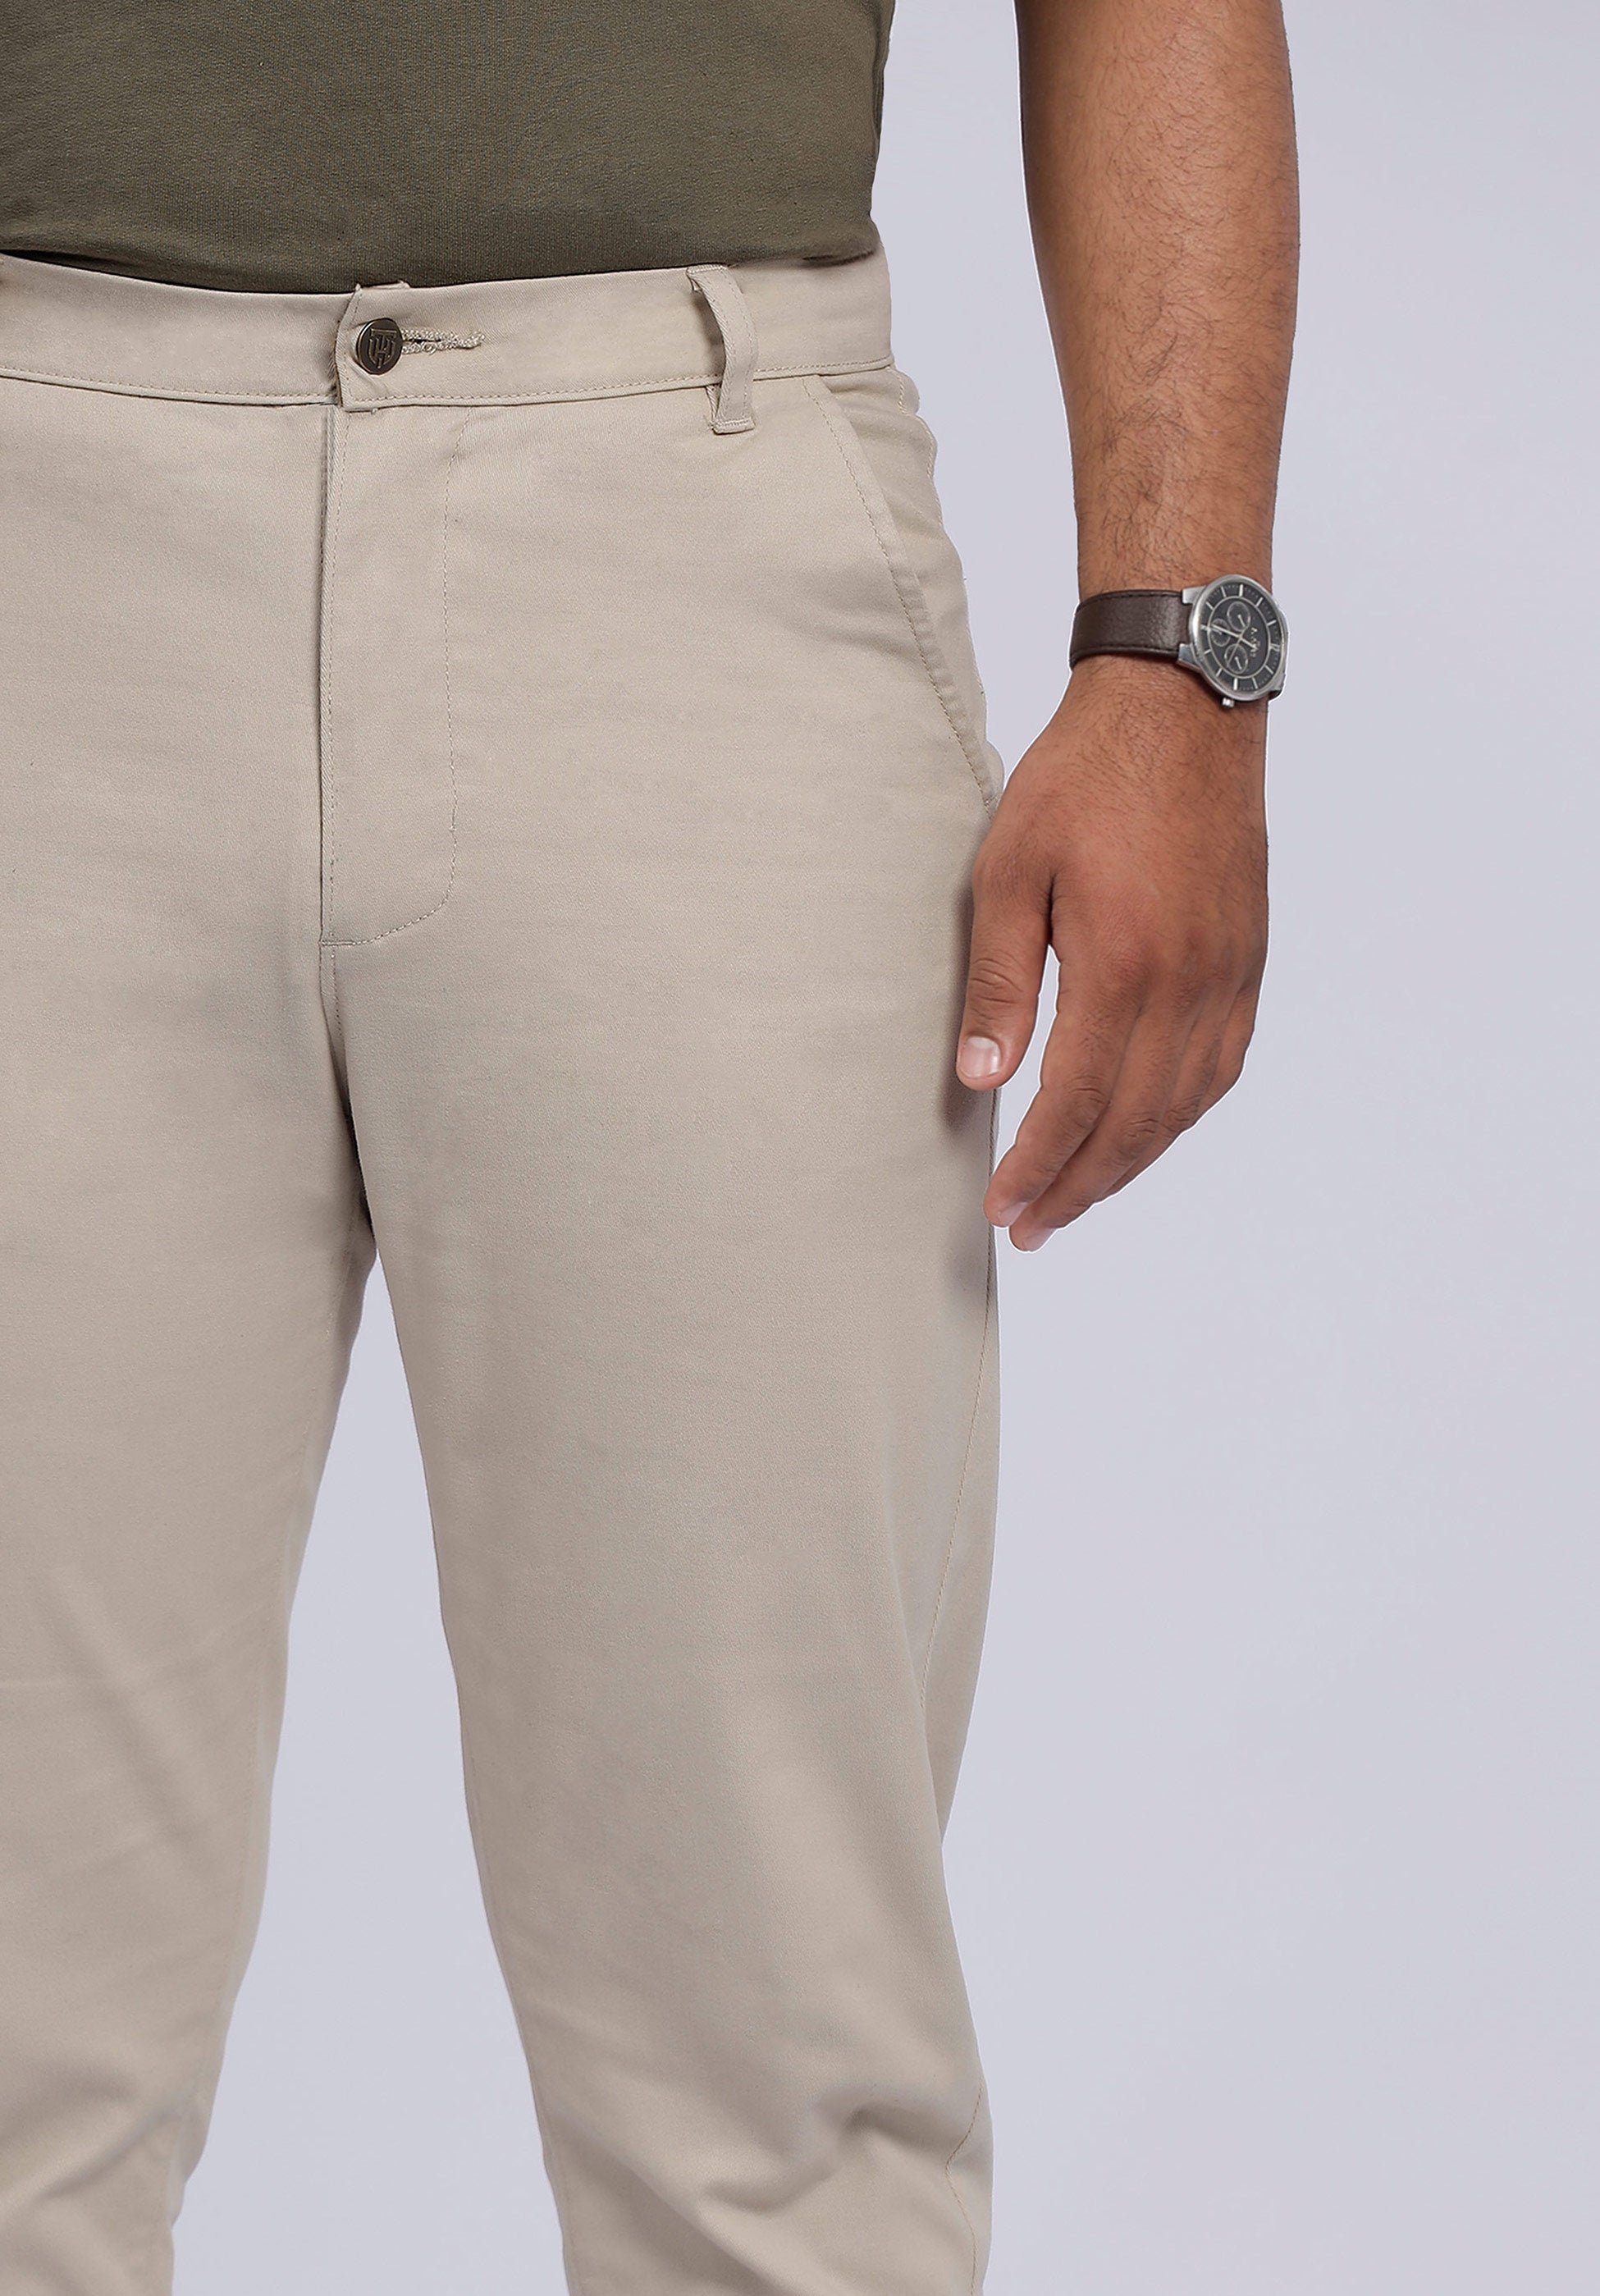 Women Straight Fit Jean pants stone color - AliExpress